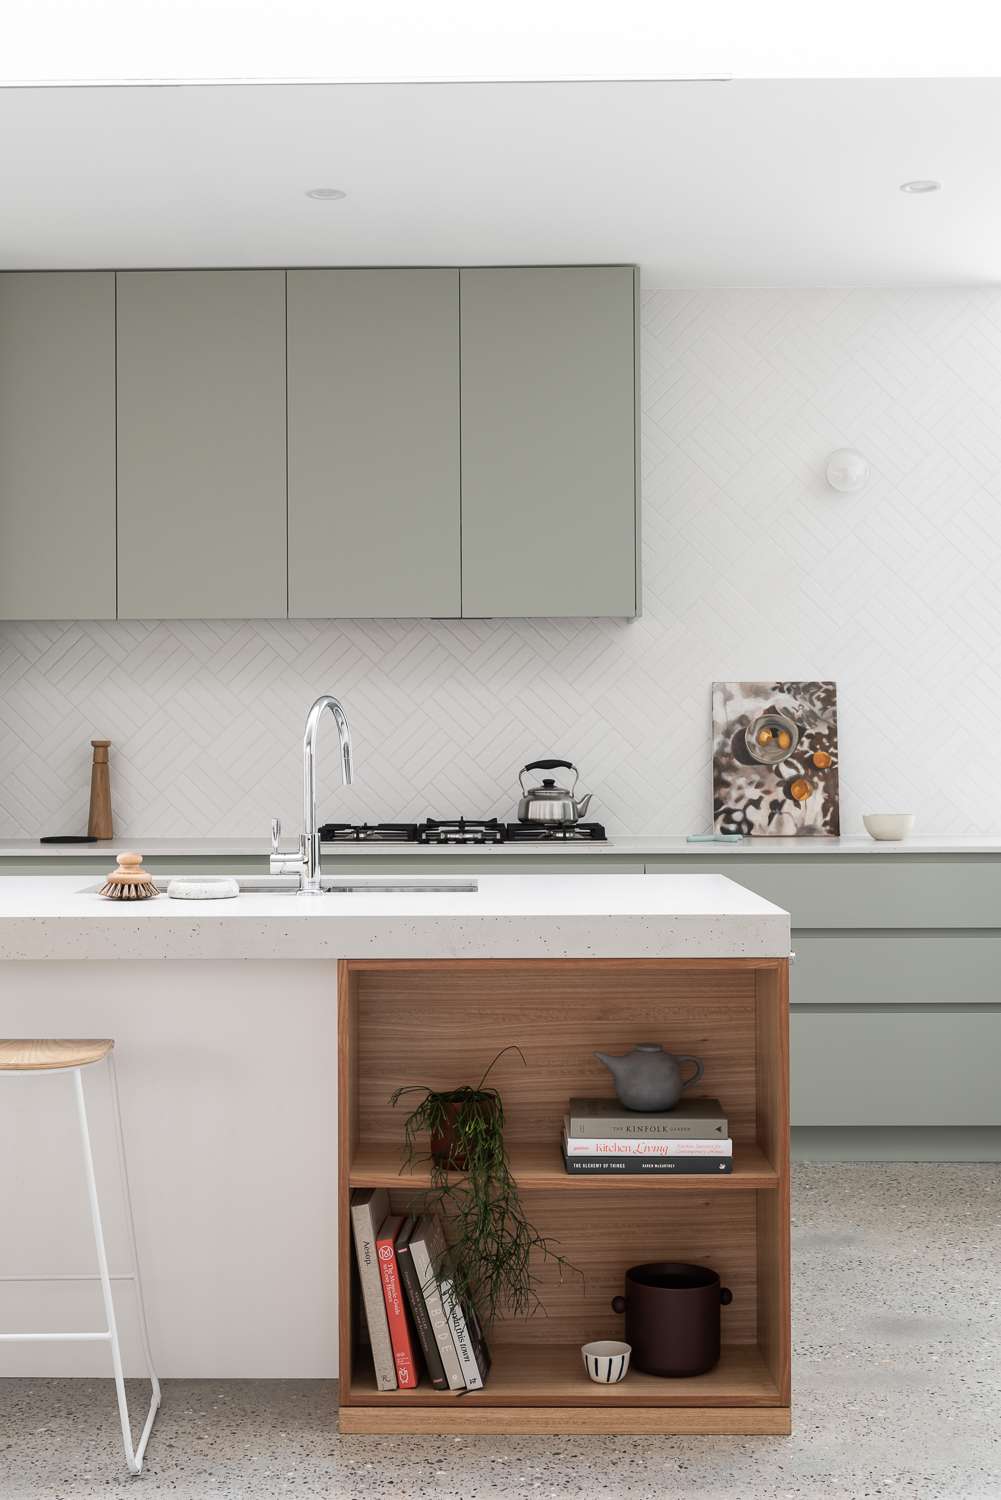 The Third by Dalecki Design showing kitchen detail